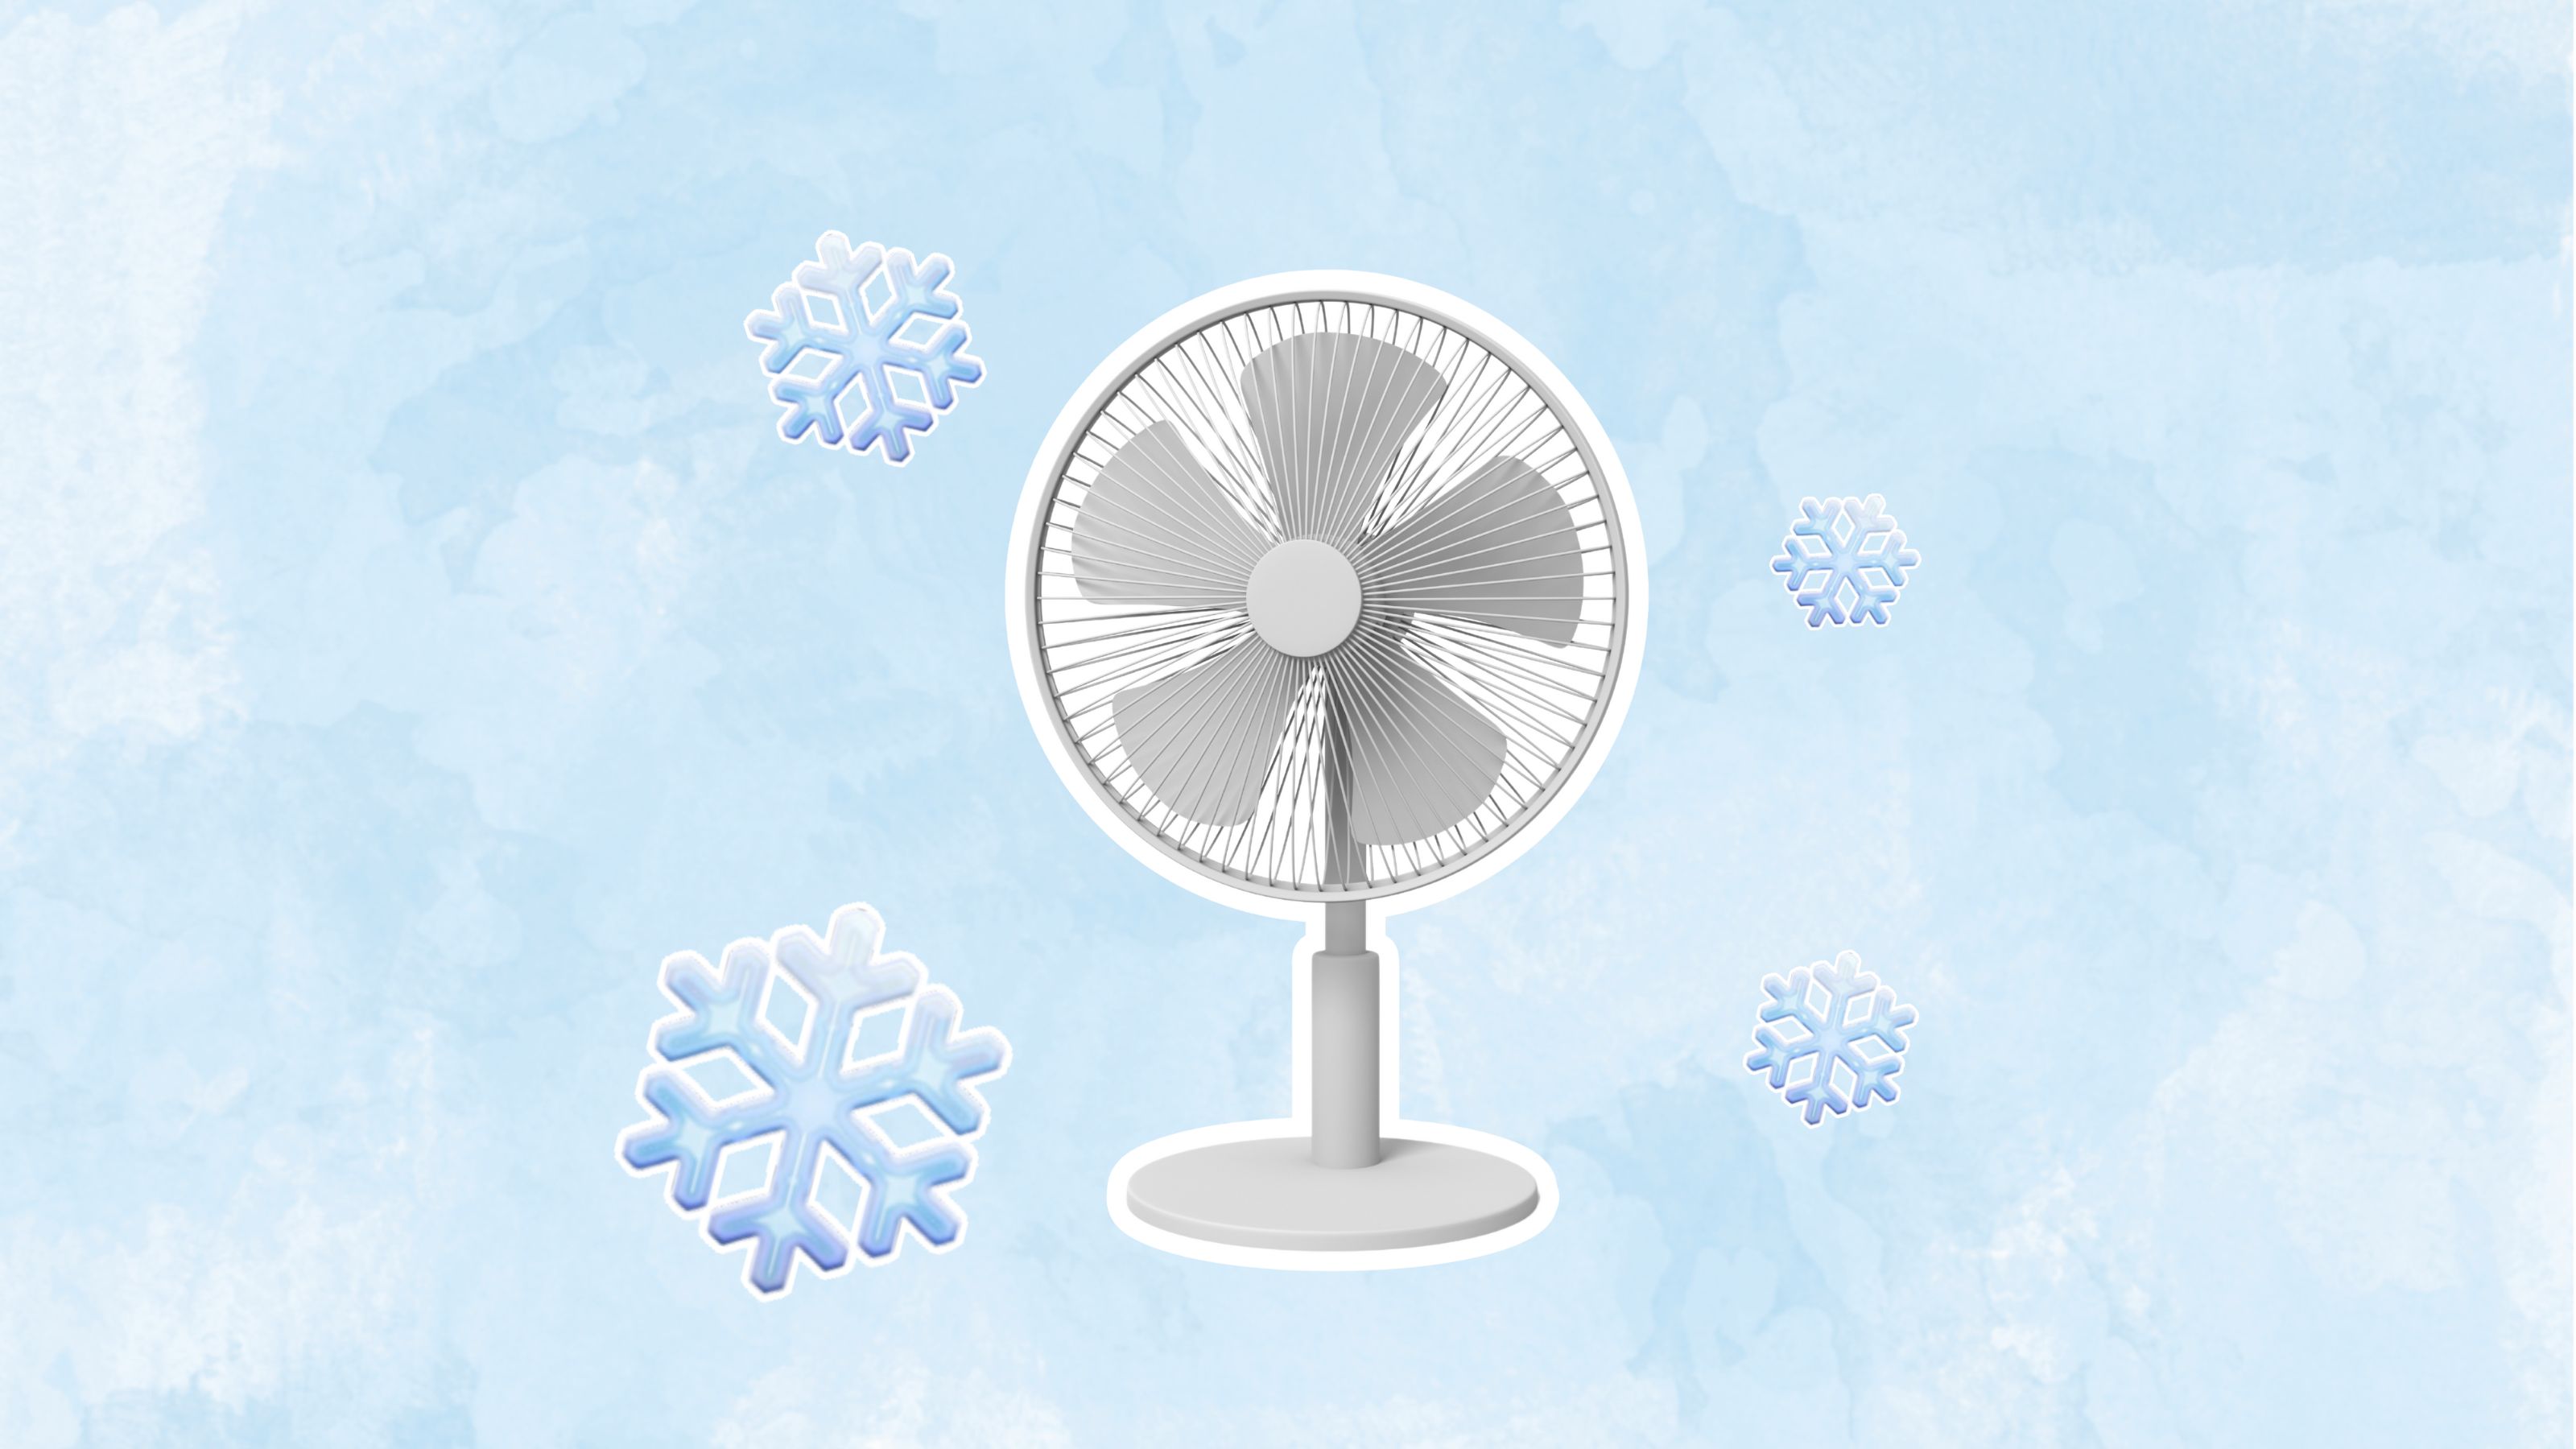 Пятерка воздуха. Вентилятор дует. Warm Air blowing Fan. Fans from the Water Cooler Air. Природа охлажденный воздух.